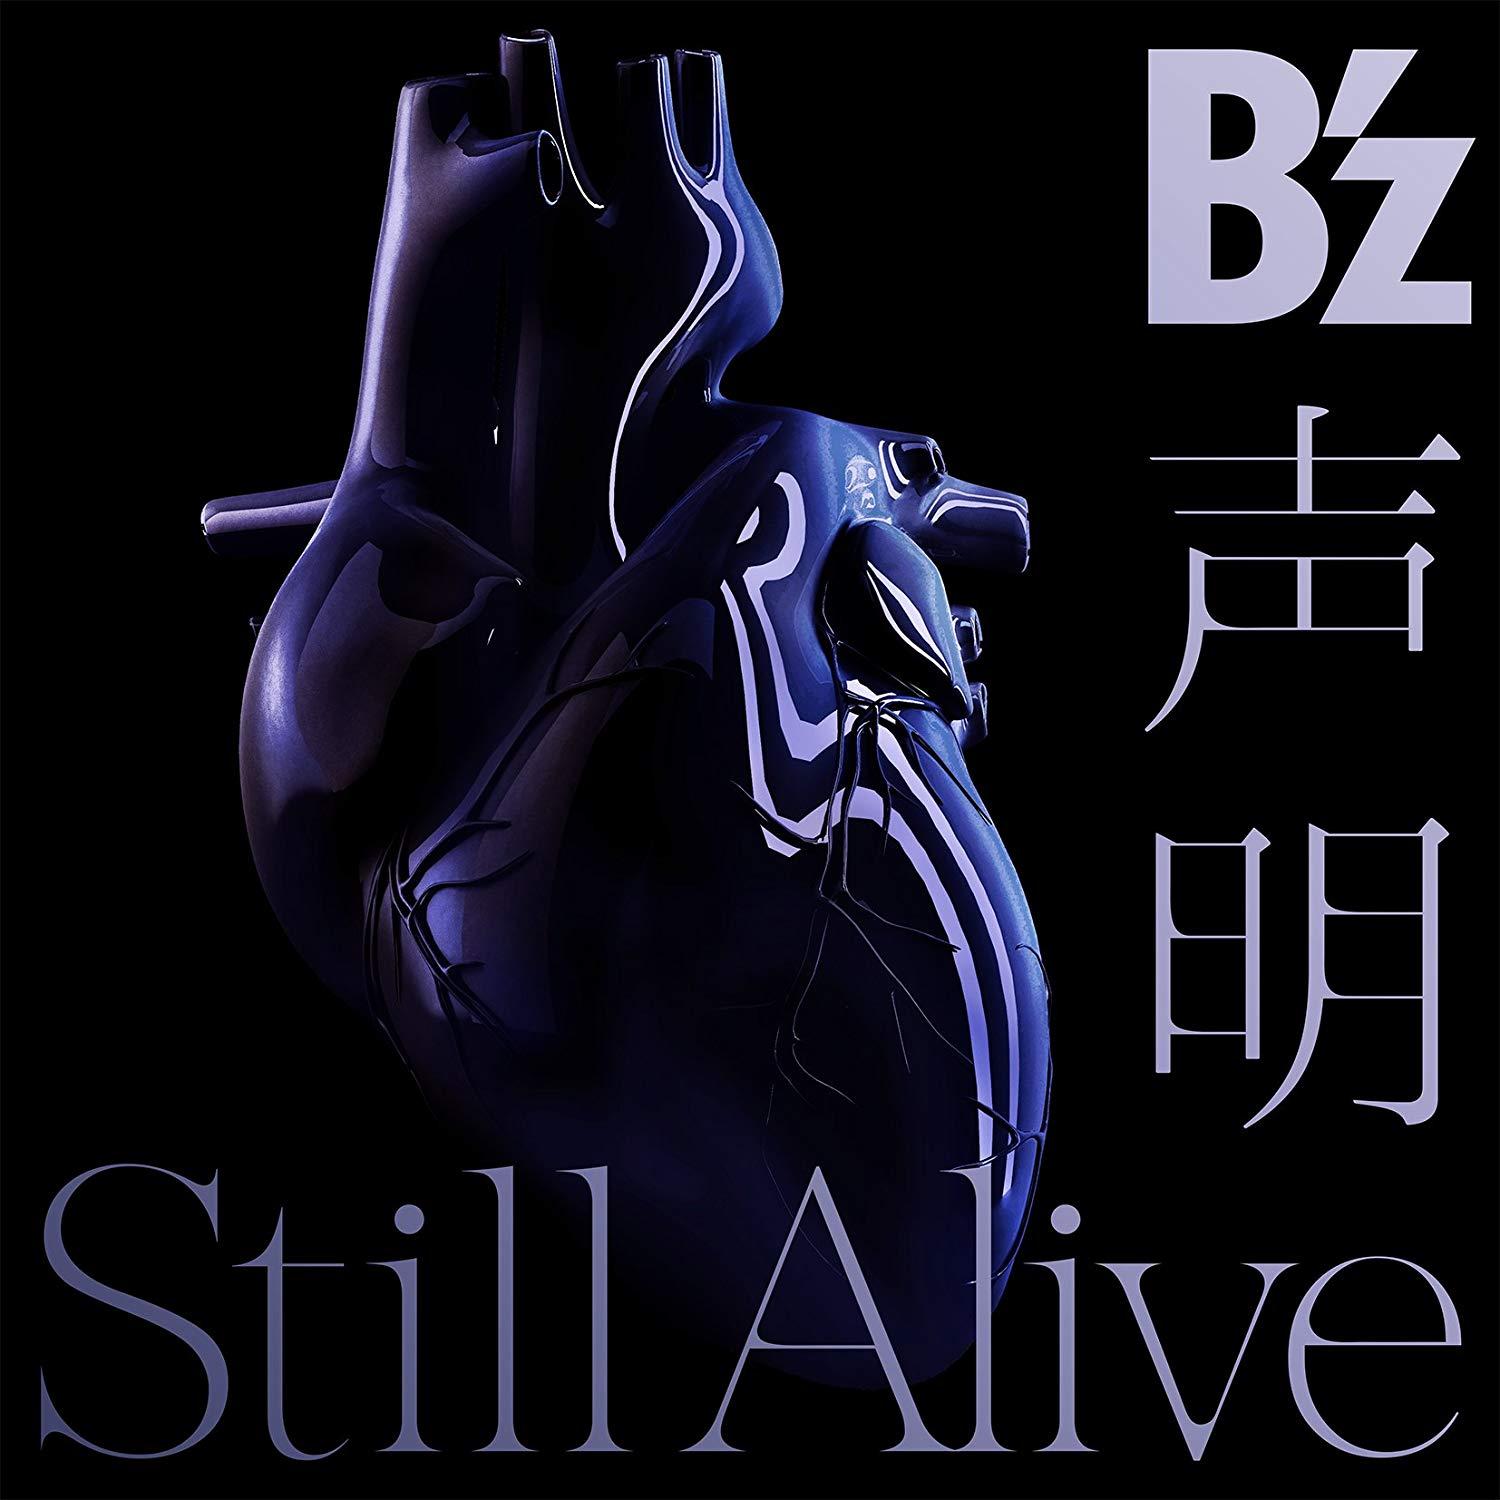 /Still Alive() B z